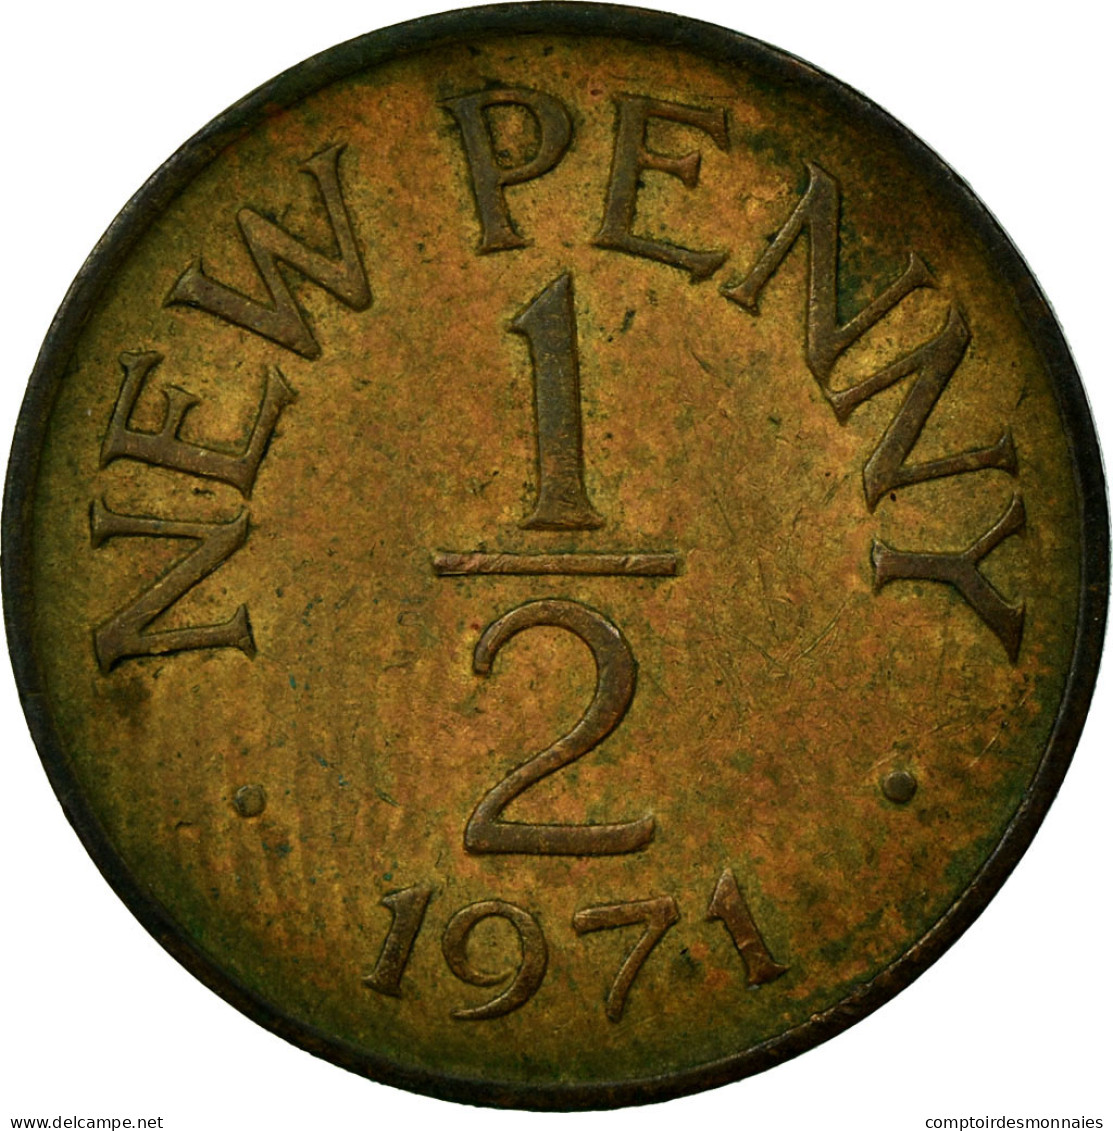 Monnaie, Guernsey, Elizabeth II, 1/2 New Penny, 1971, TTB, Bronze, KM:20 - Guernesey